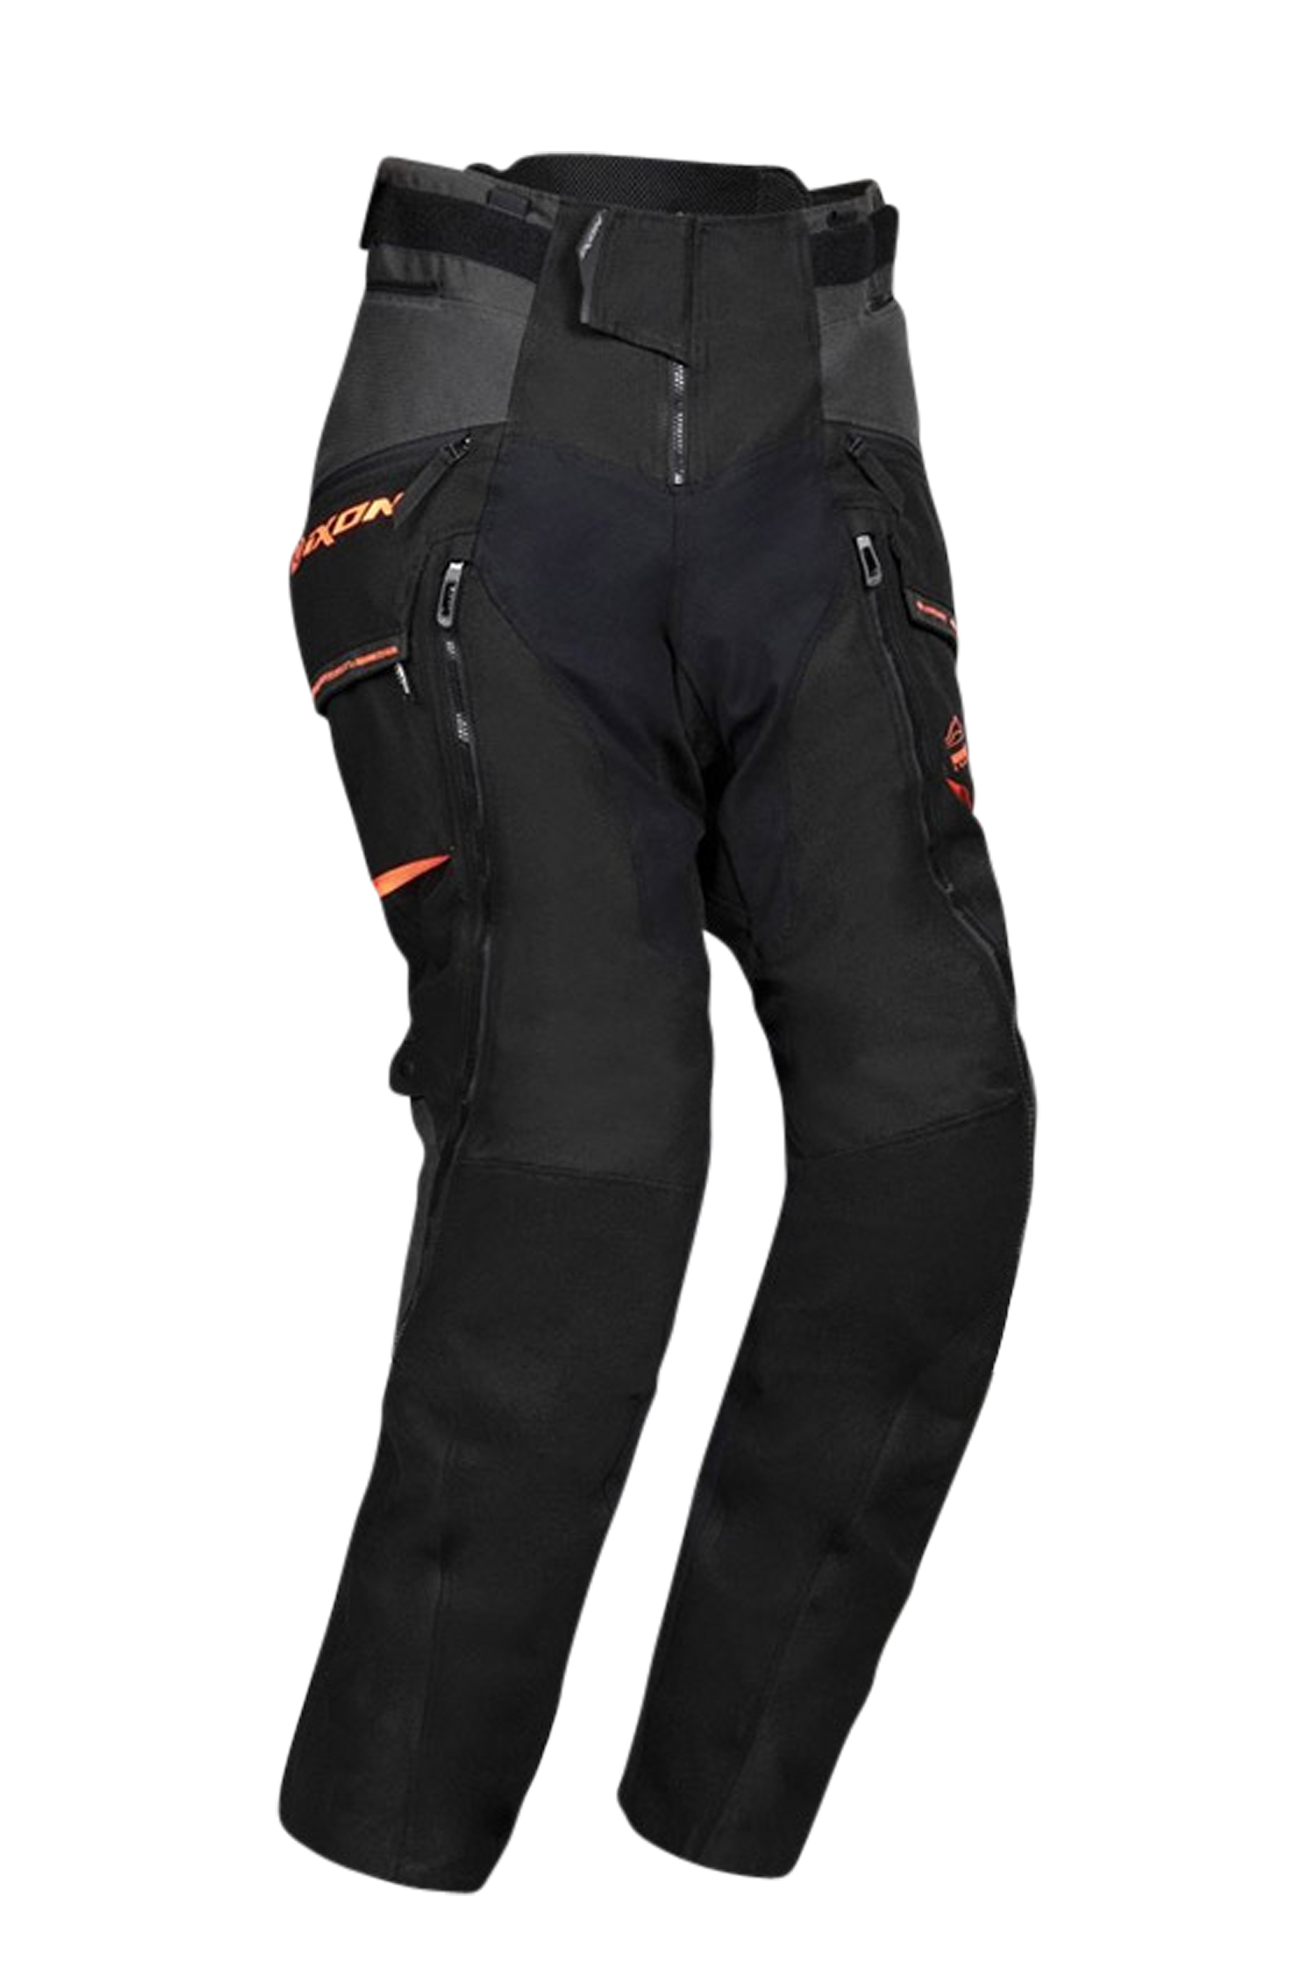 Ixon Pantalones de Moto  Ragnar Negro-Antracita-Naranja